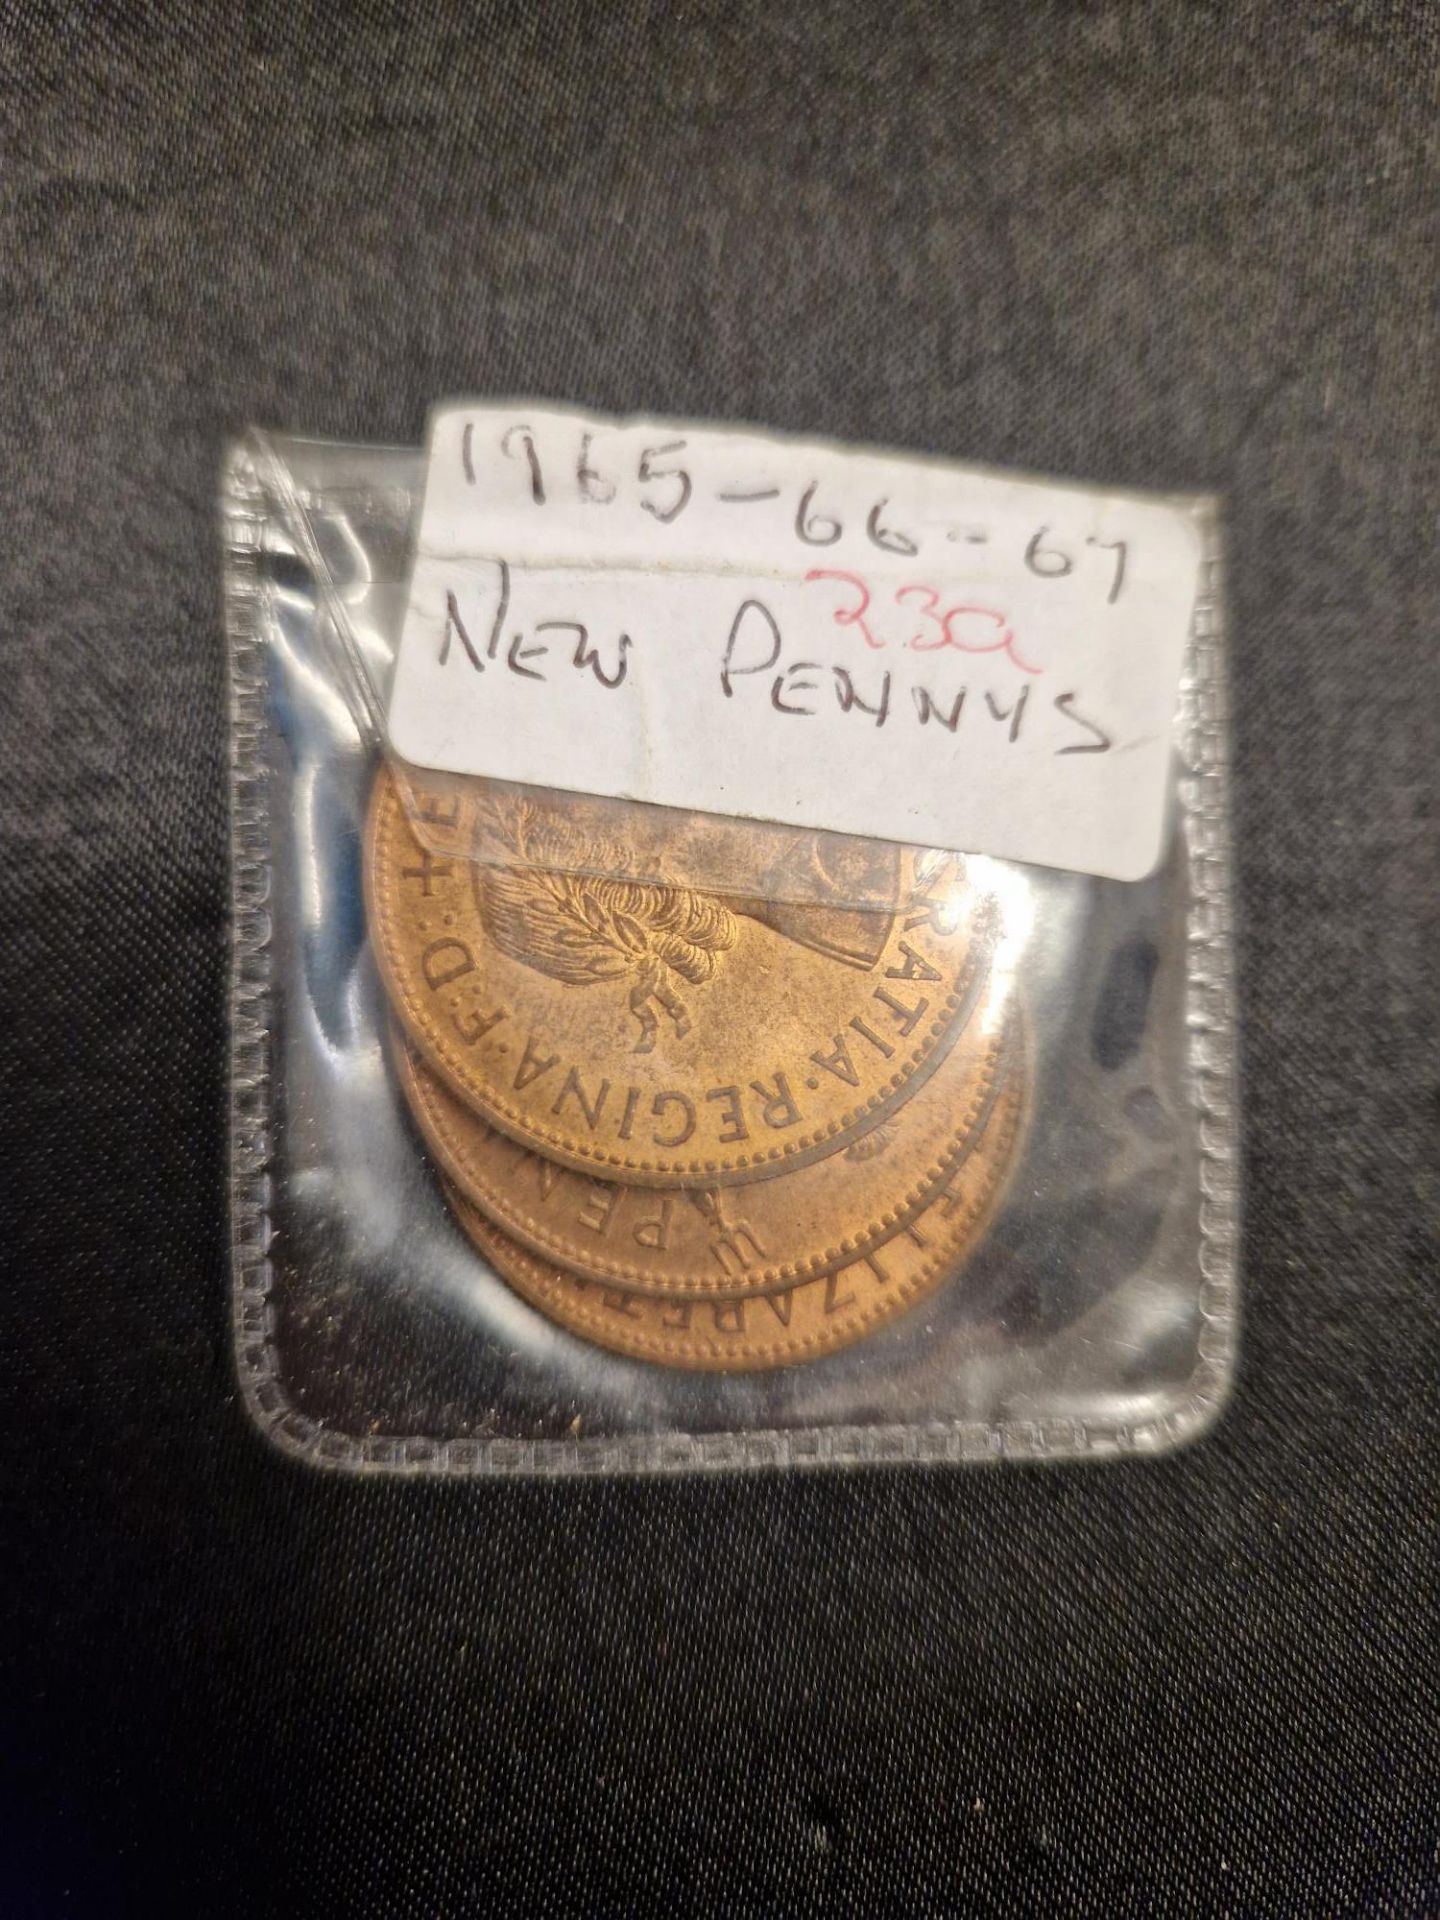 1965 - 66 - 67 new pennys